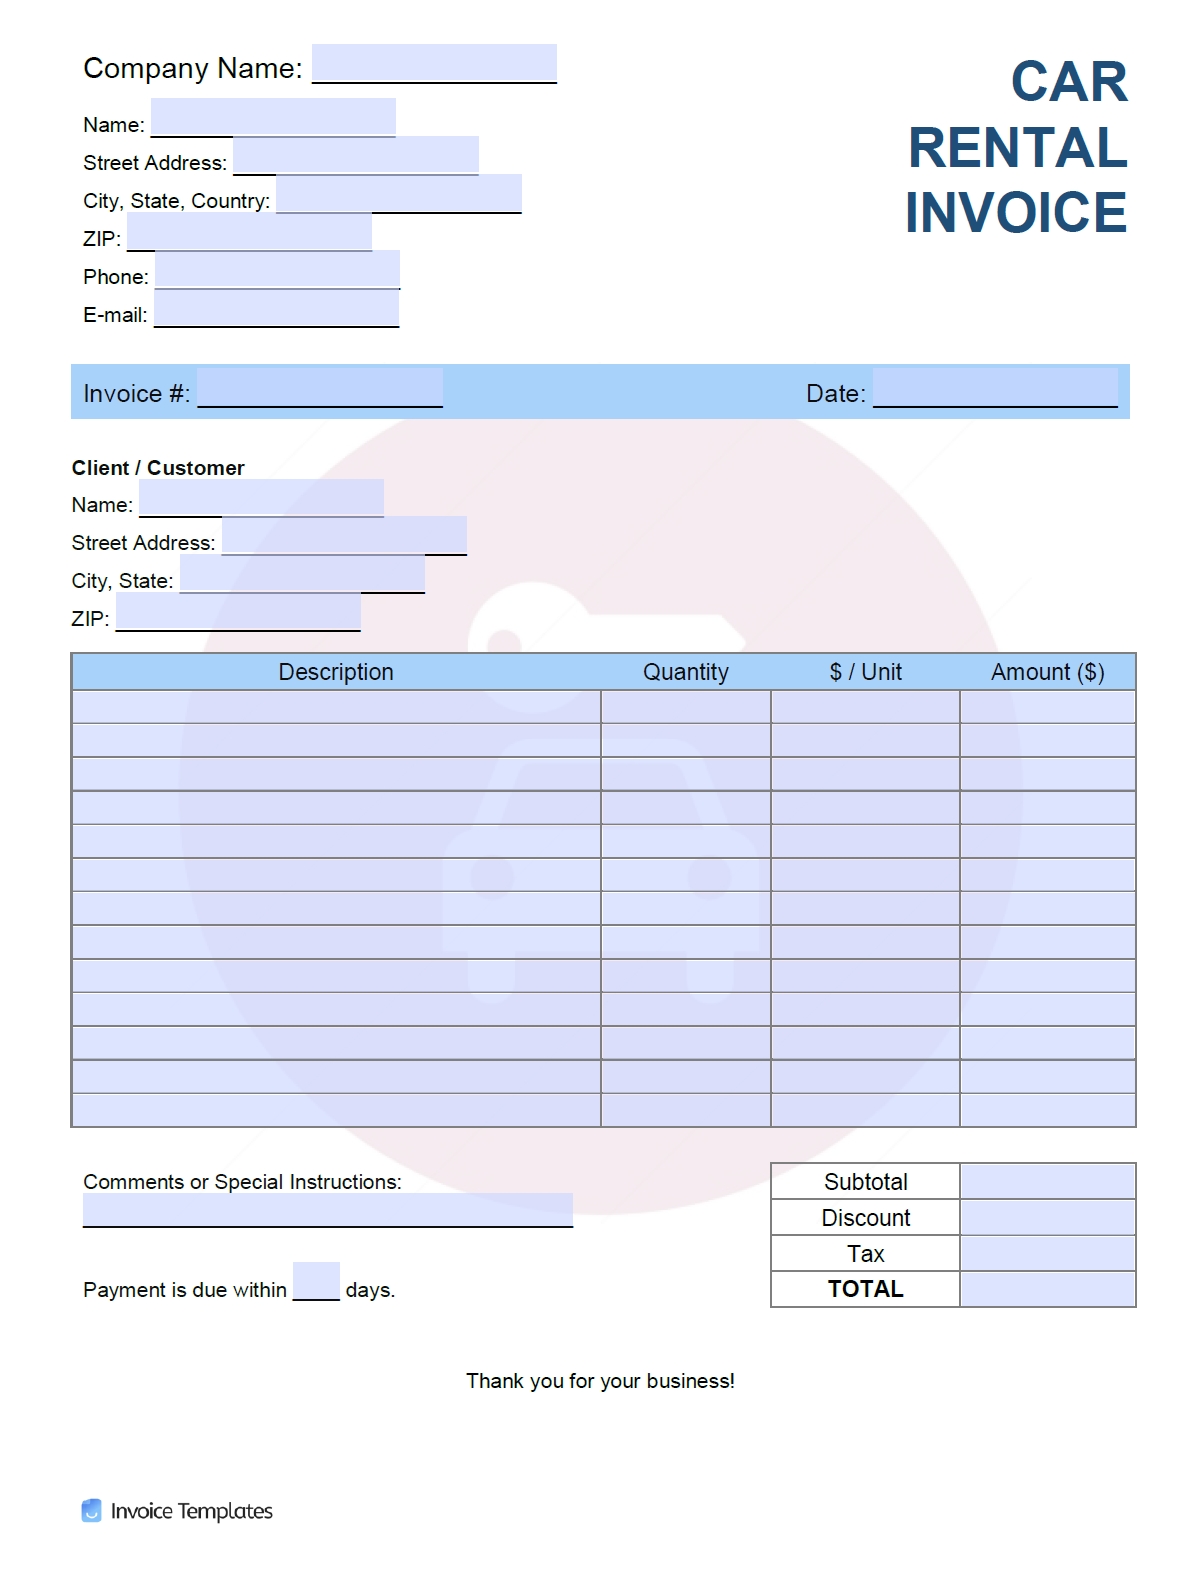 free car rental invoice template pdf word excel car rental invoice temple